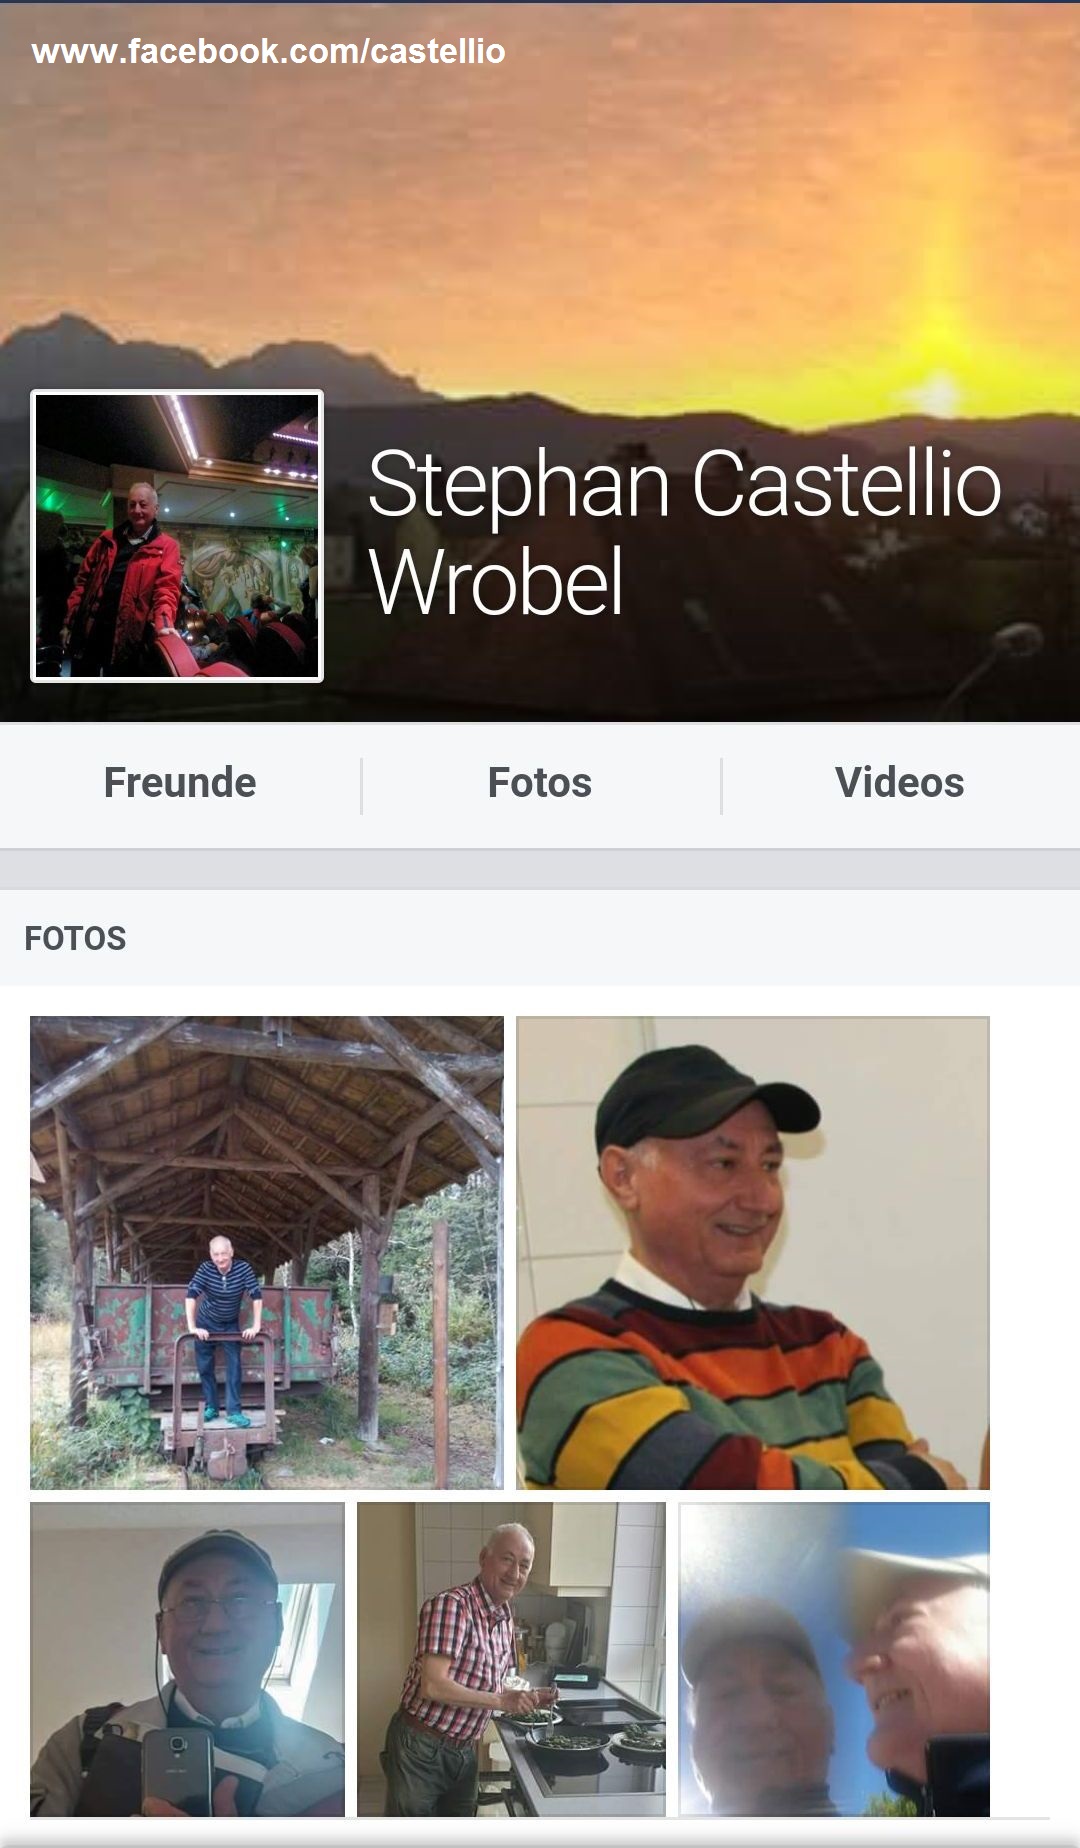 "Stephan Castellio Wrobel" on facebook